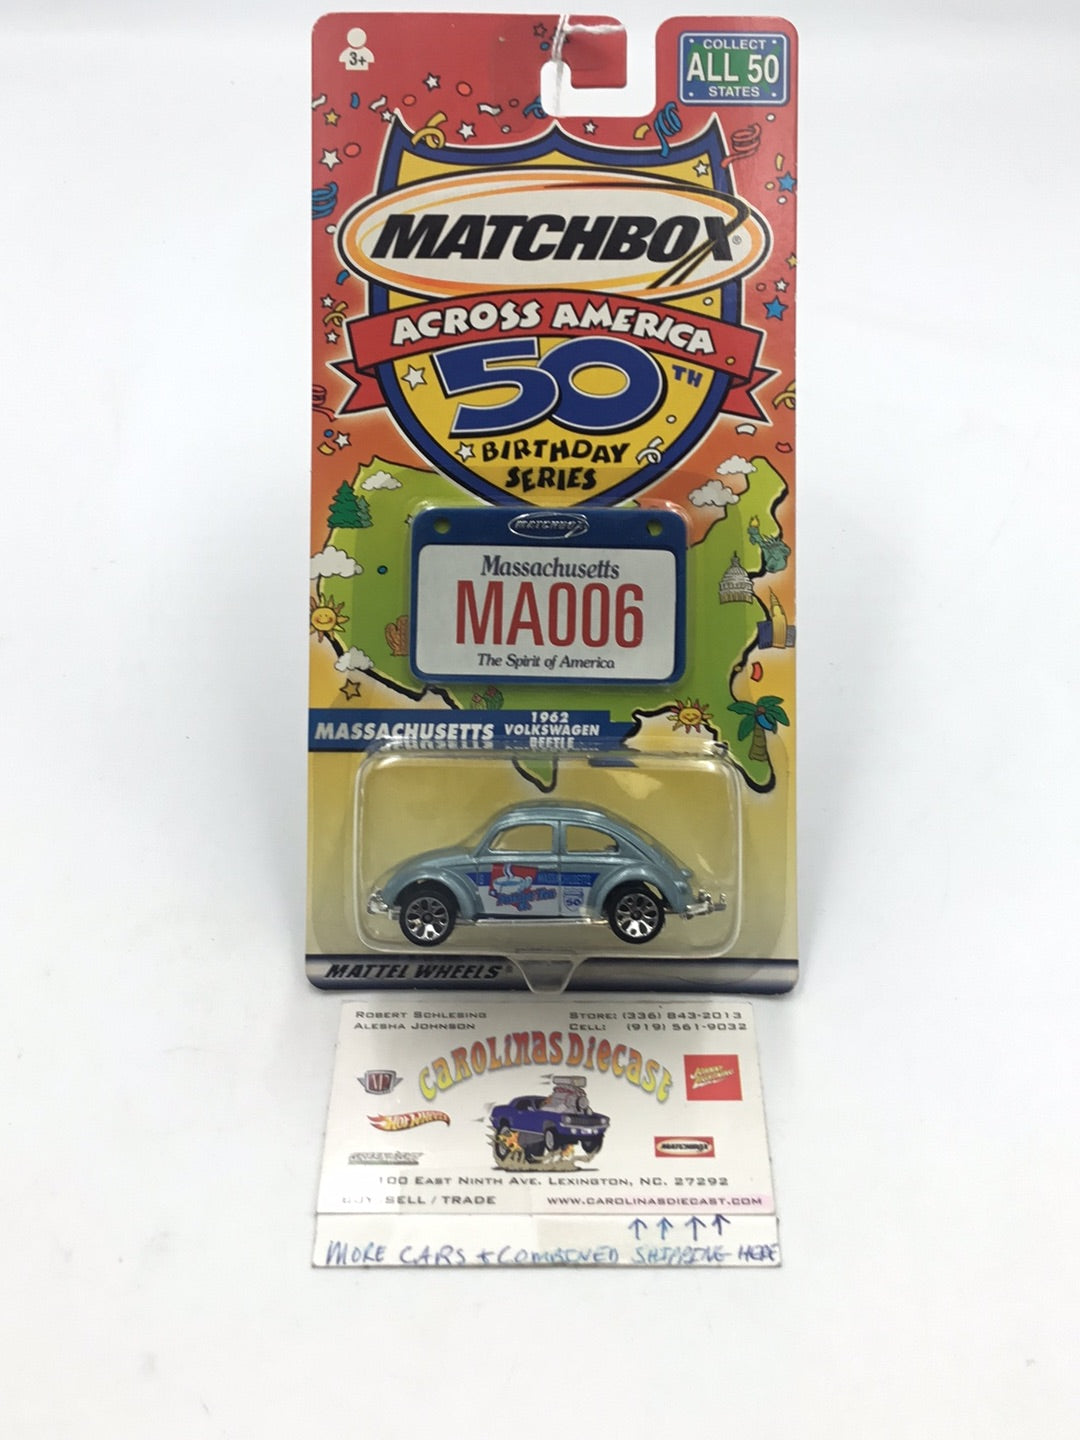 Matchbox Across America Massachusetts 1962 Volkswagen Beetle 212G